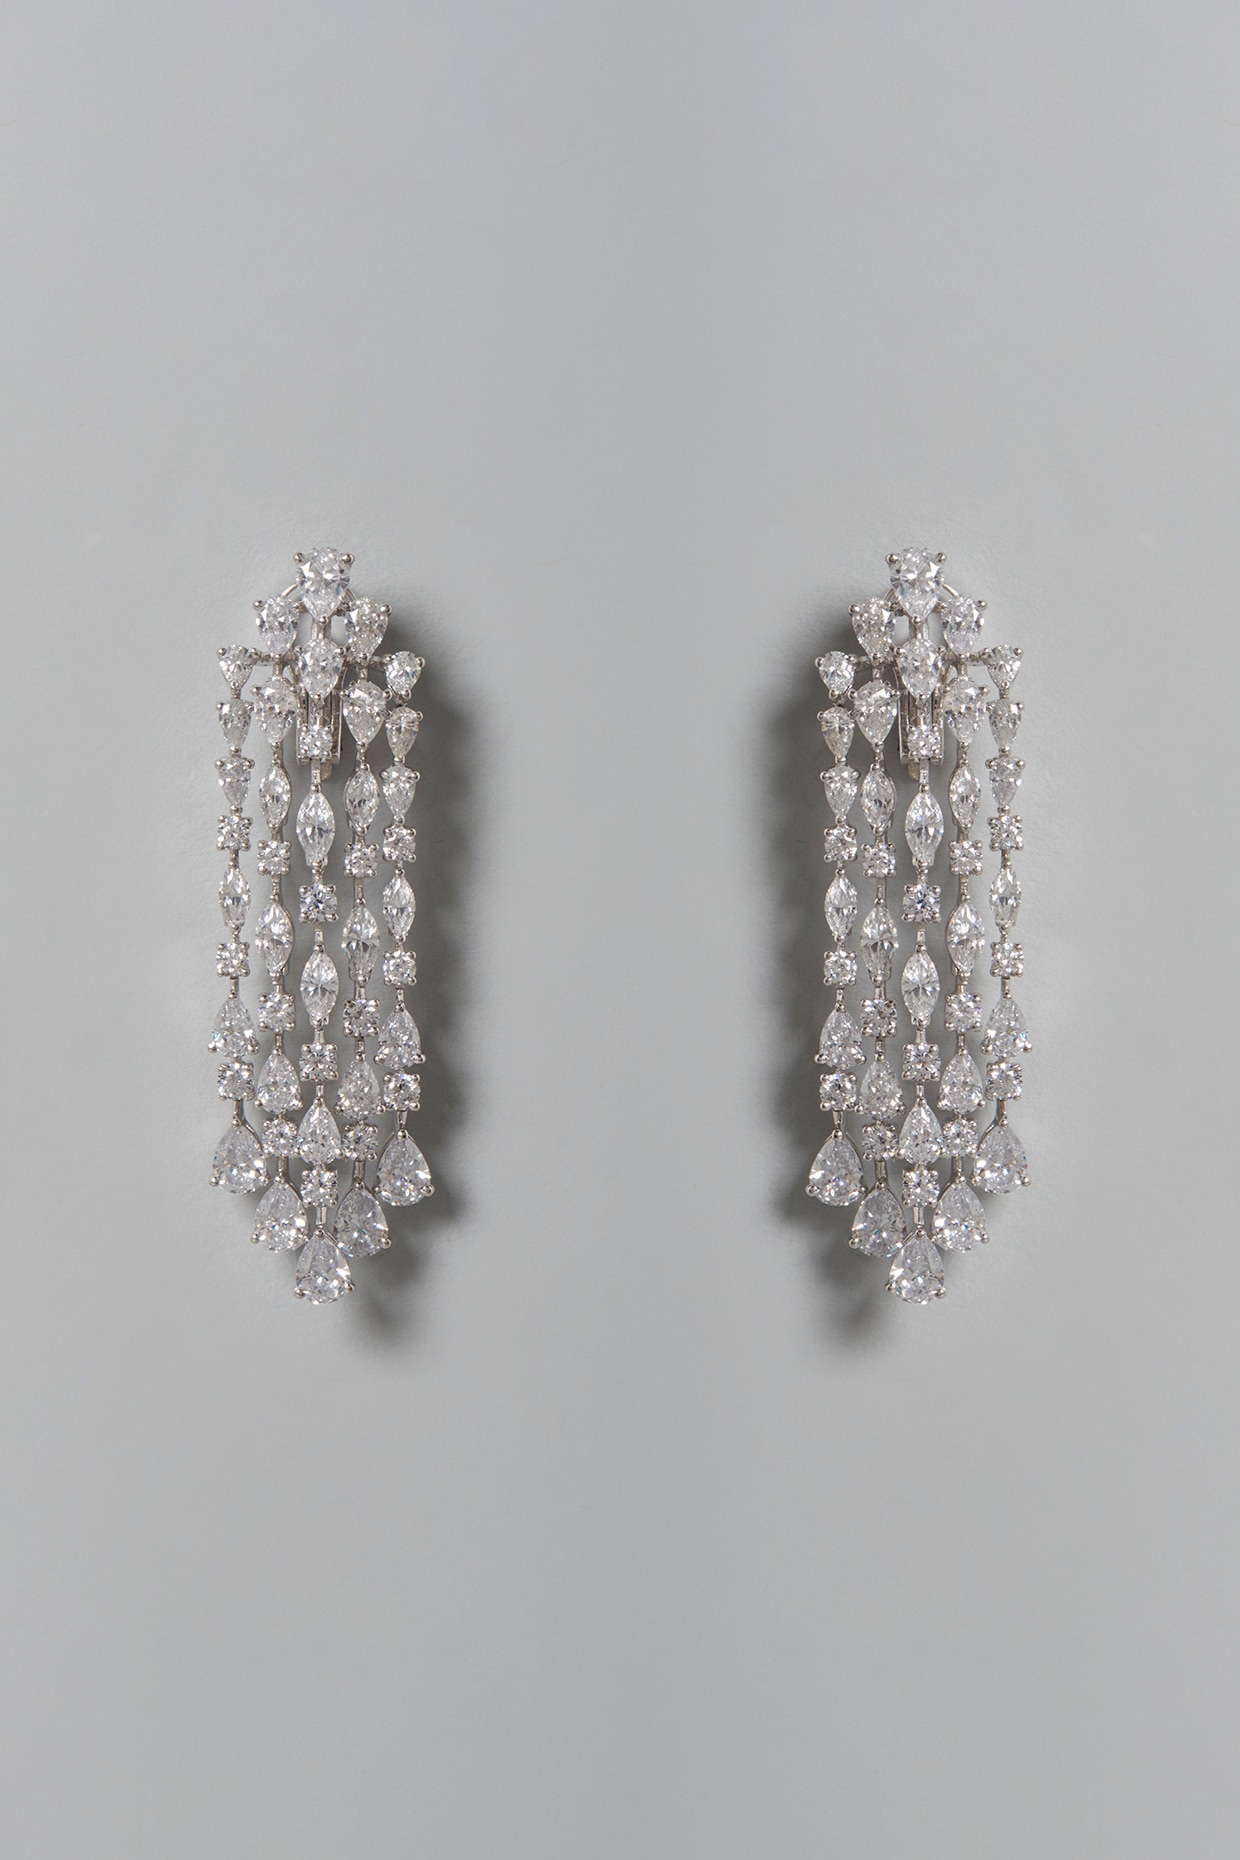 Long Chandelier Earrings, with Green Drop Shaped Stones : Amazon.in: Fashion